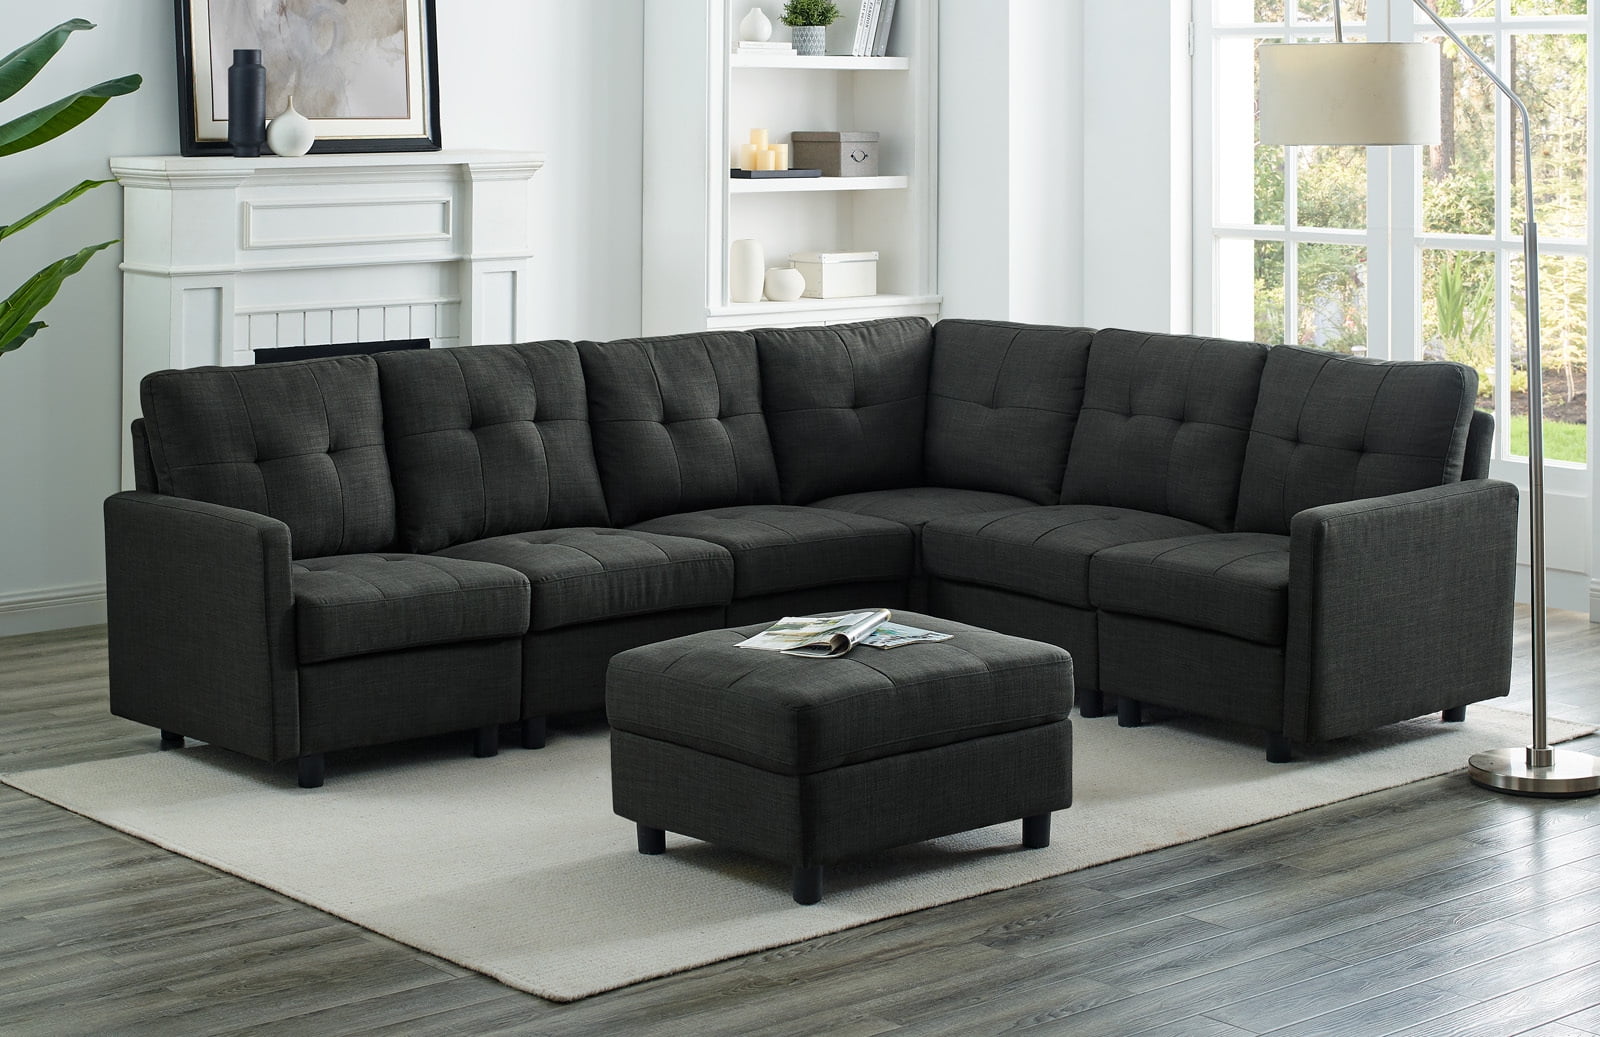 Lohoms Modern Sectional Sofa with Ottoman, 7pcs U-Shaped Sofa Couch Set ...